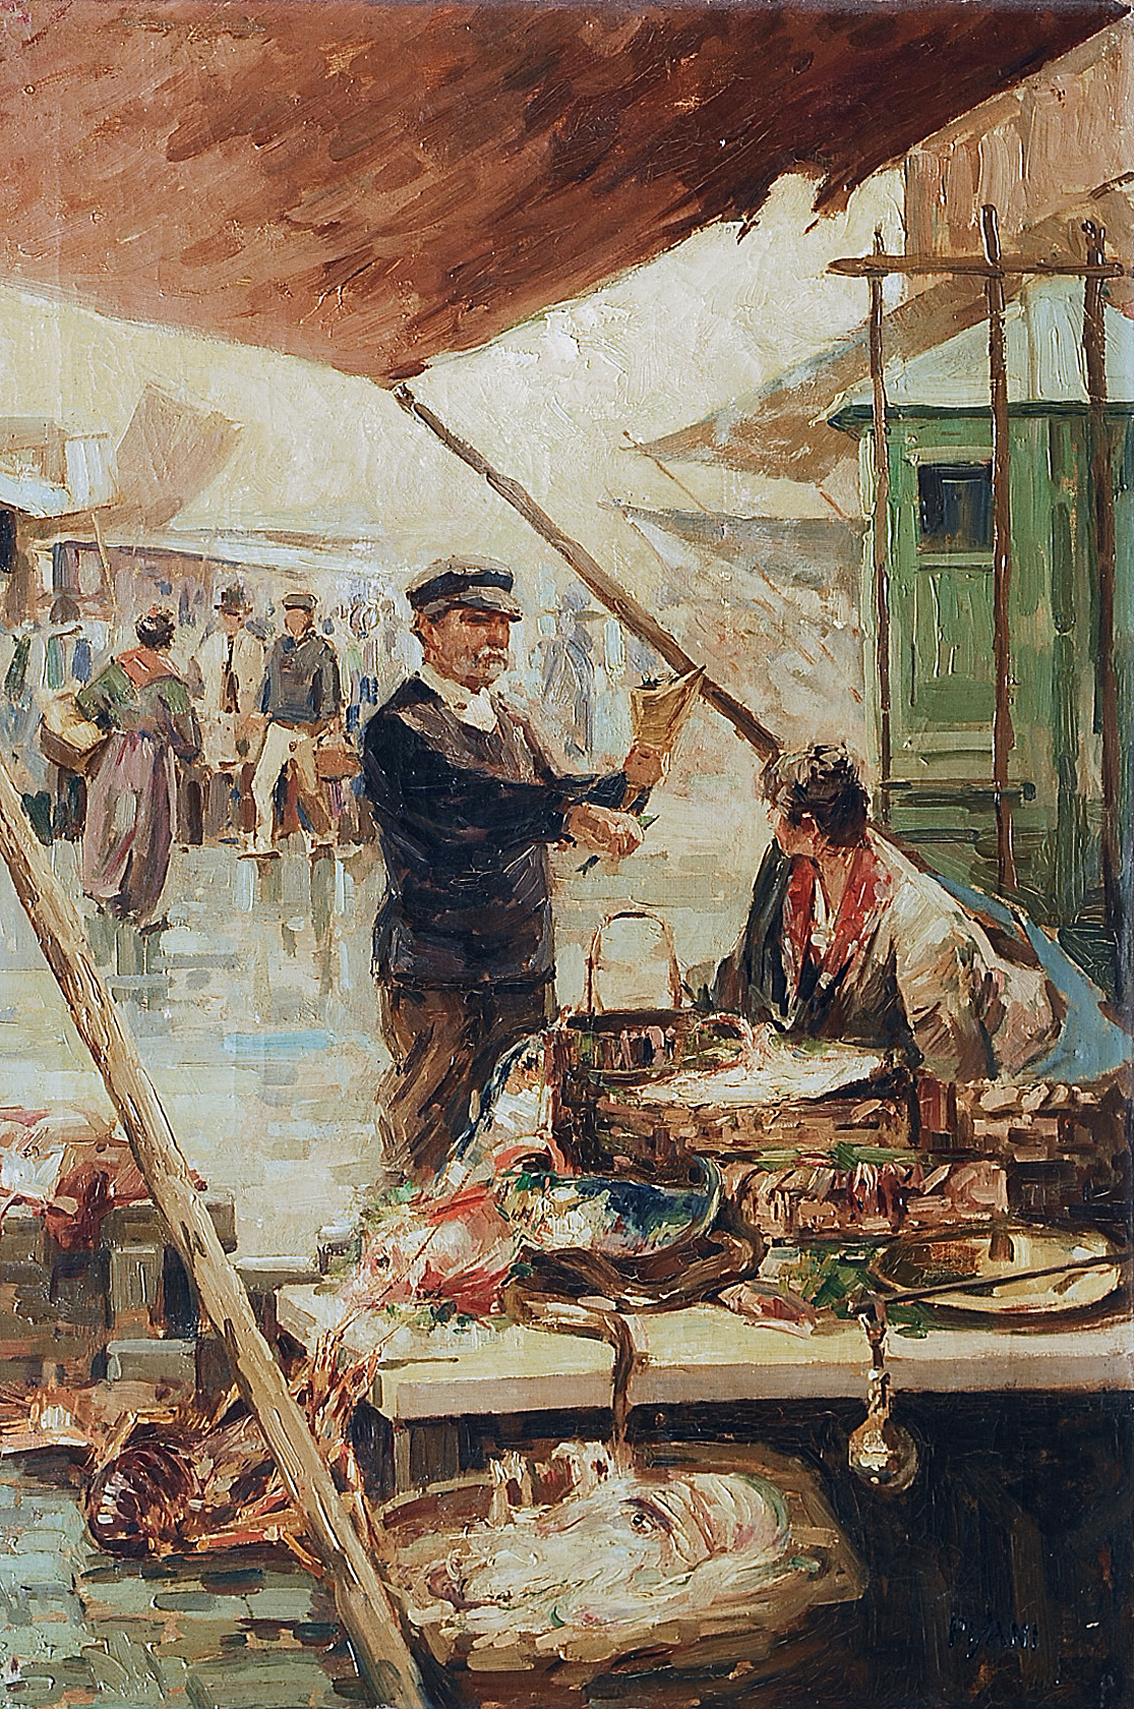 The fish market at Naples